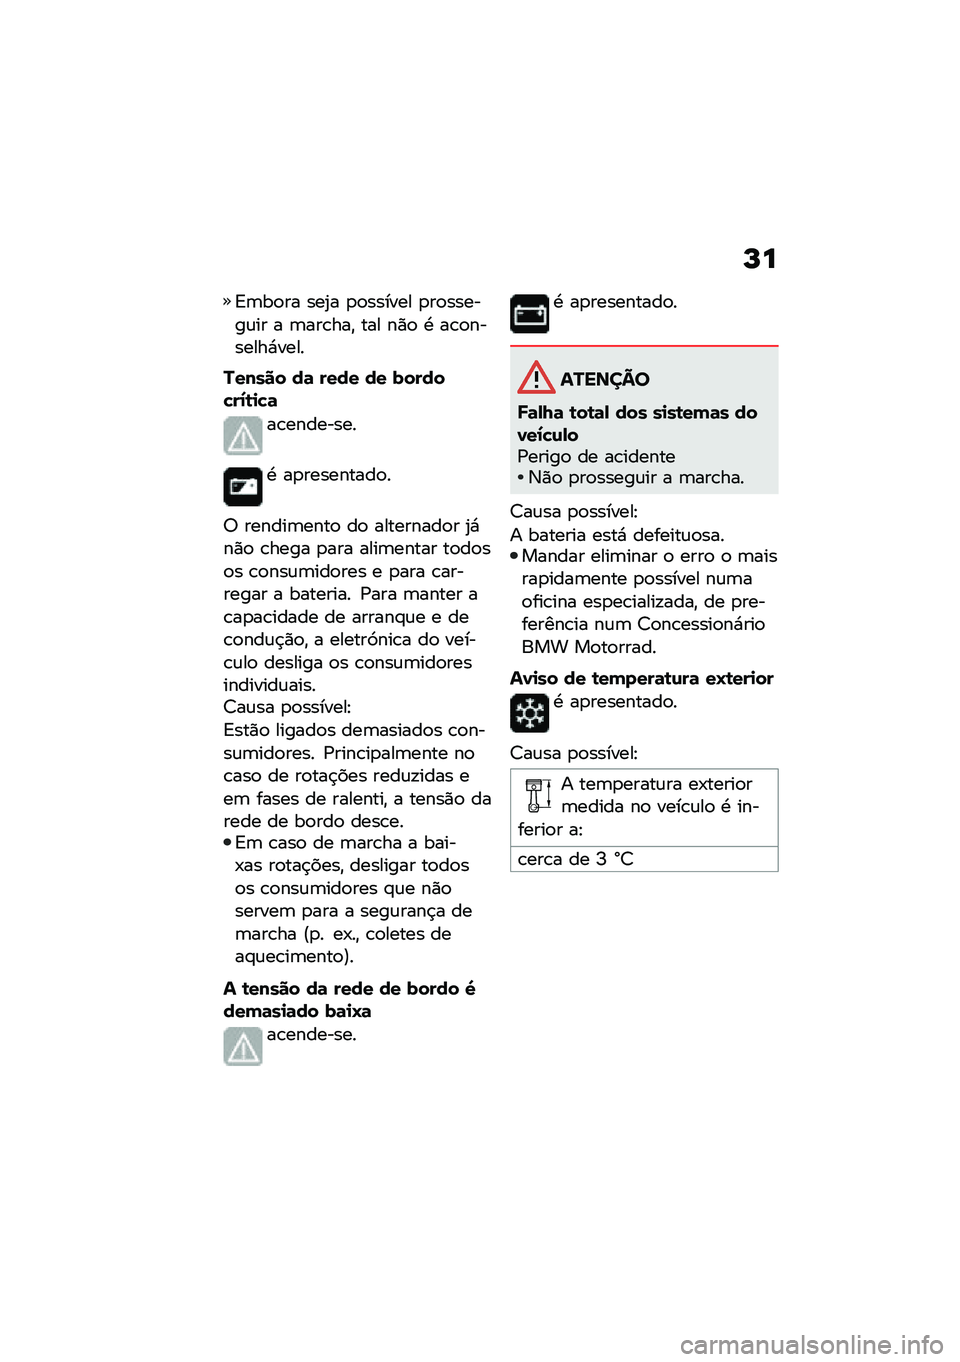 BMW MOTORRAD R NINE T URVAN G/S 2021  Manual do condutor (in Portuguese) �M�
�<�	��
�� ���2� �
�
������ �
��
������\f�� � �	���\b���" ��� ��)�
 �. ��\b�
�������*����
������ ��	 ���� �� ������!��1�\b�
�!�	
��\b��